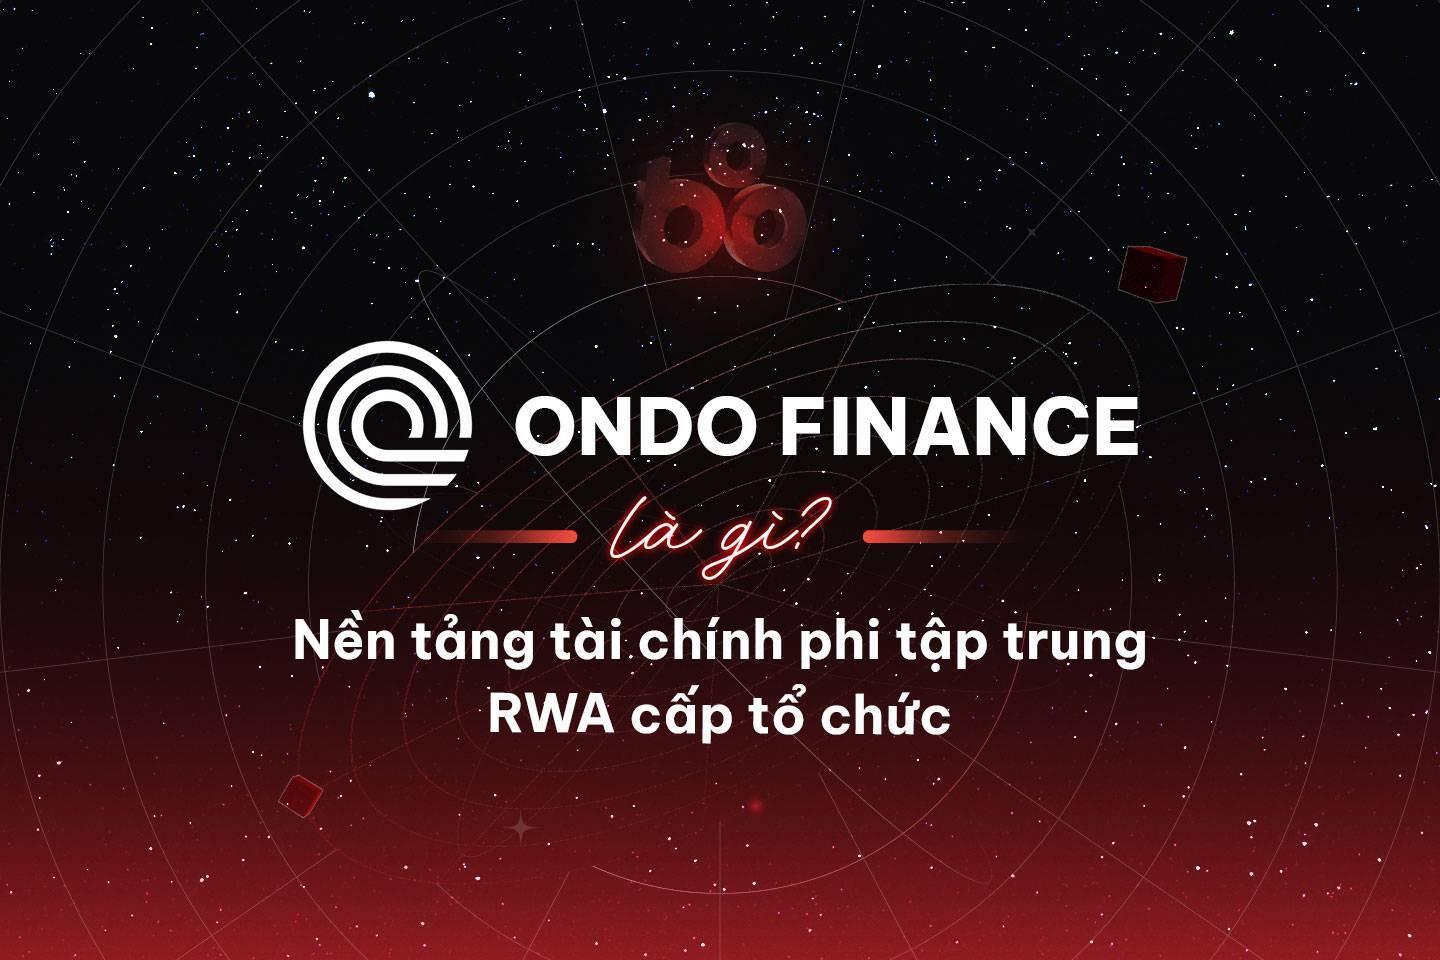 ondo-finance-ondo-la-gi-nen-tang-tai-chinh-phi-tap-trung-rwa-cap-to-chuc